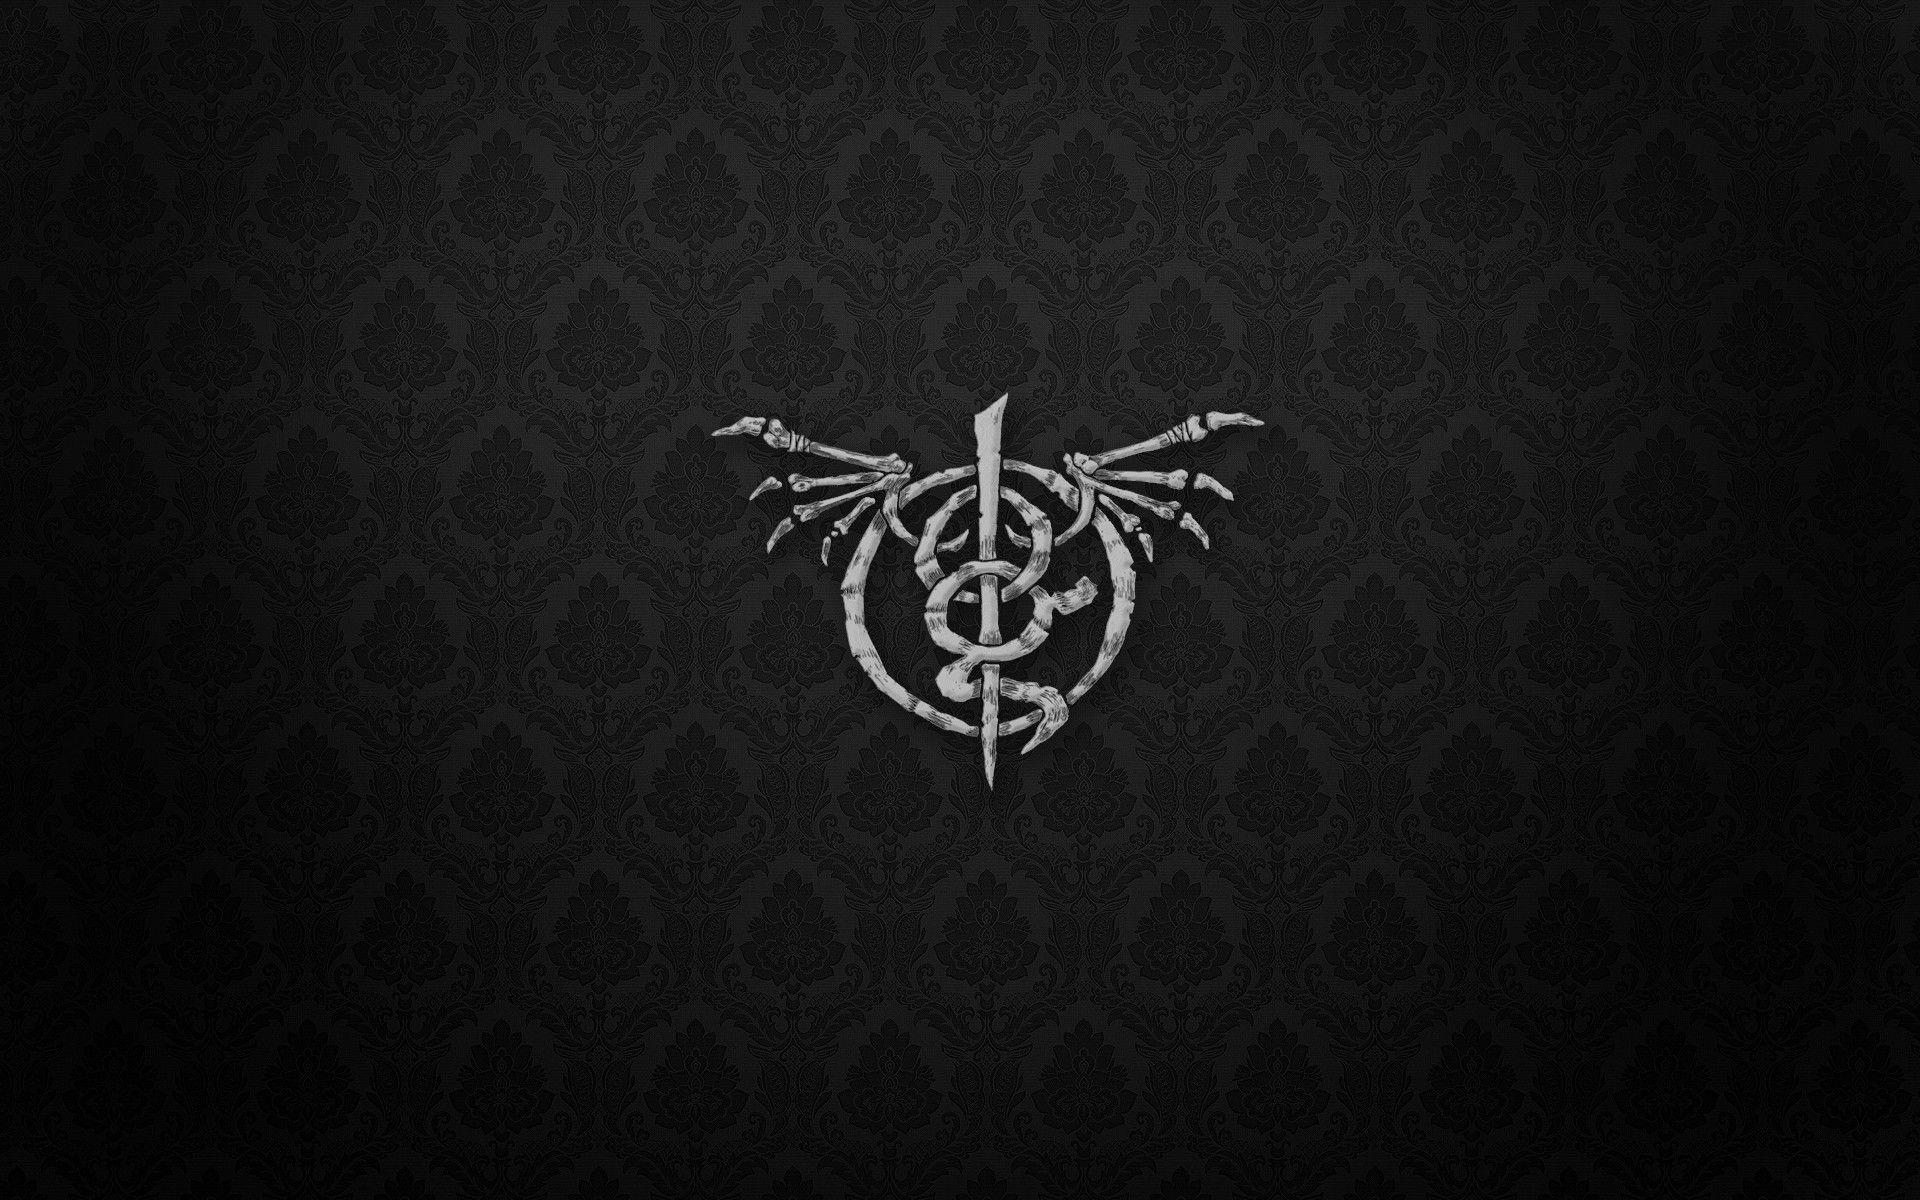 Metal Band Logo Hd Quality Wallpapers